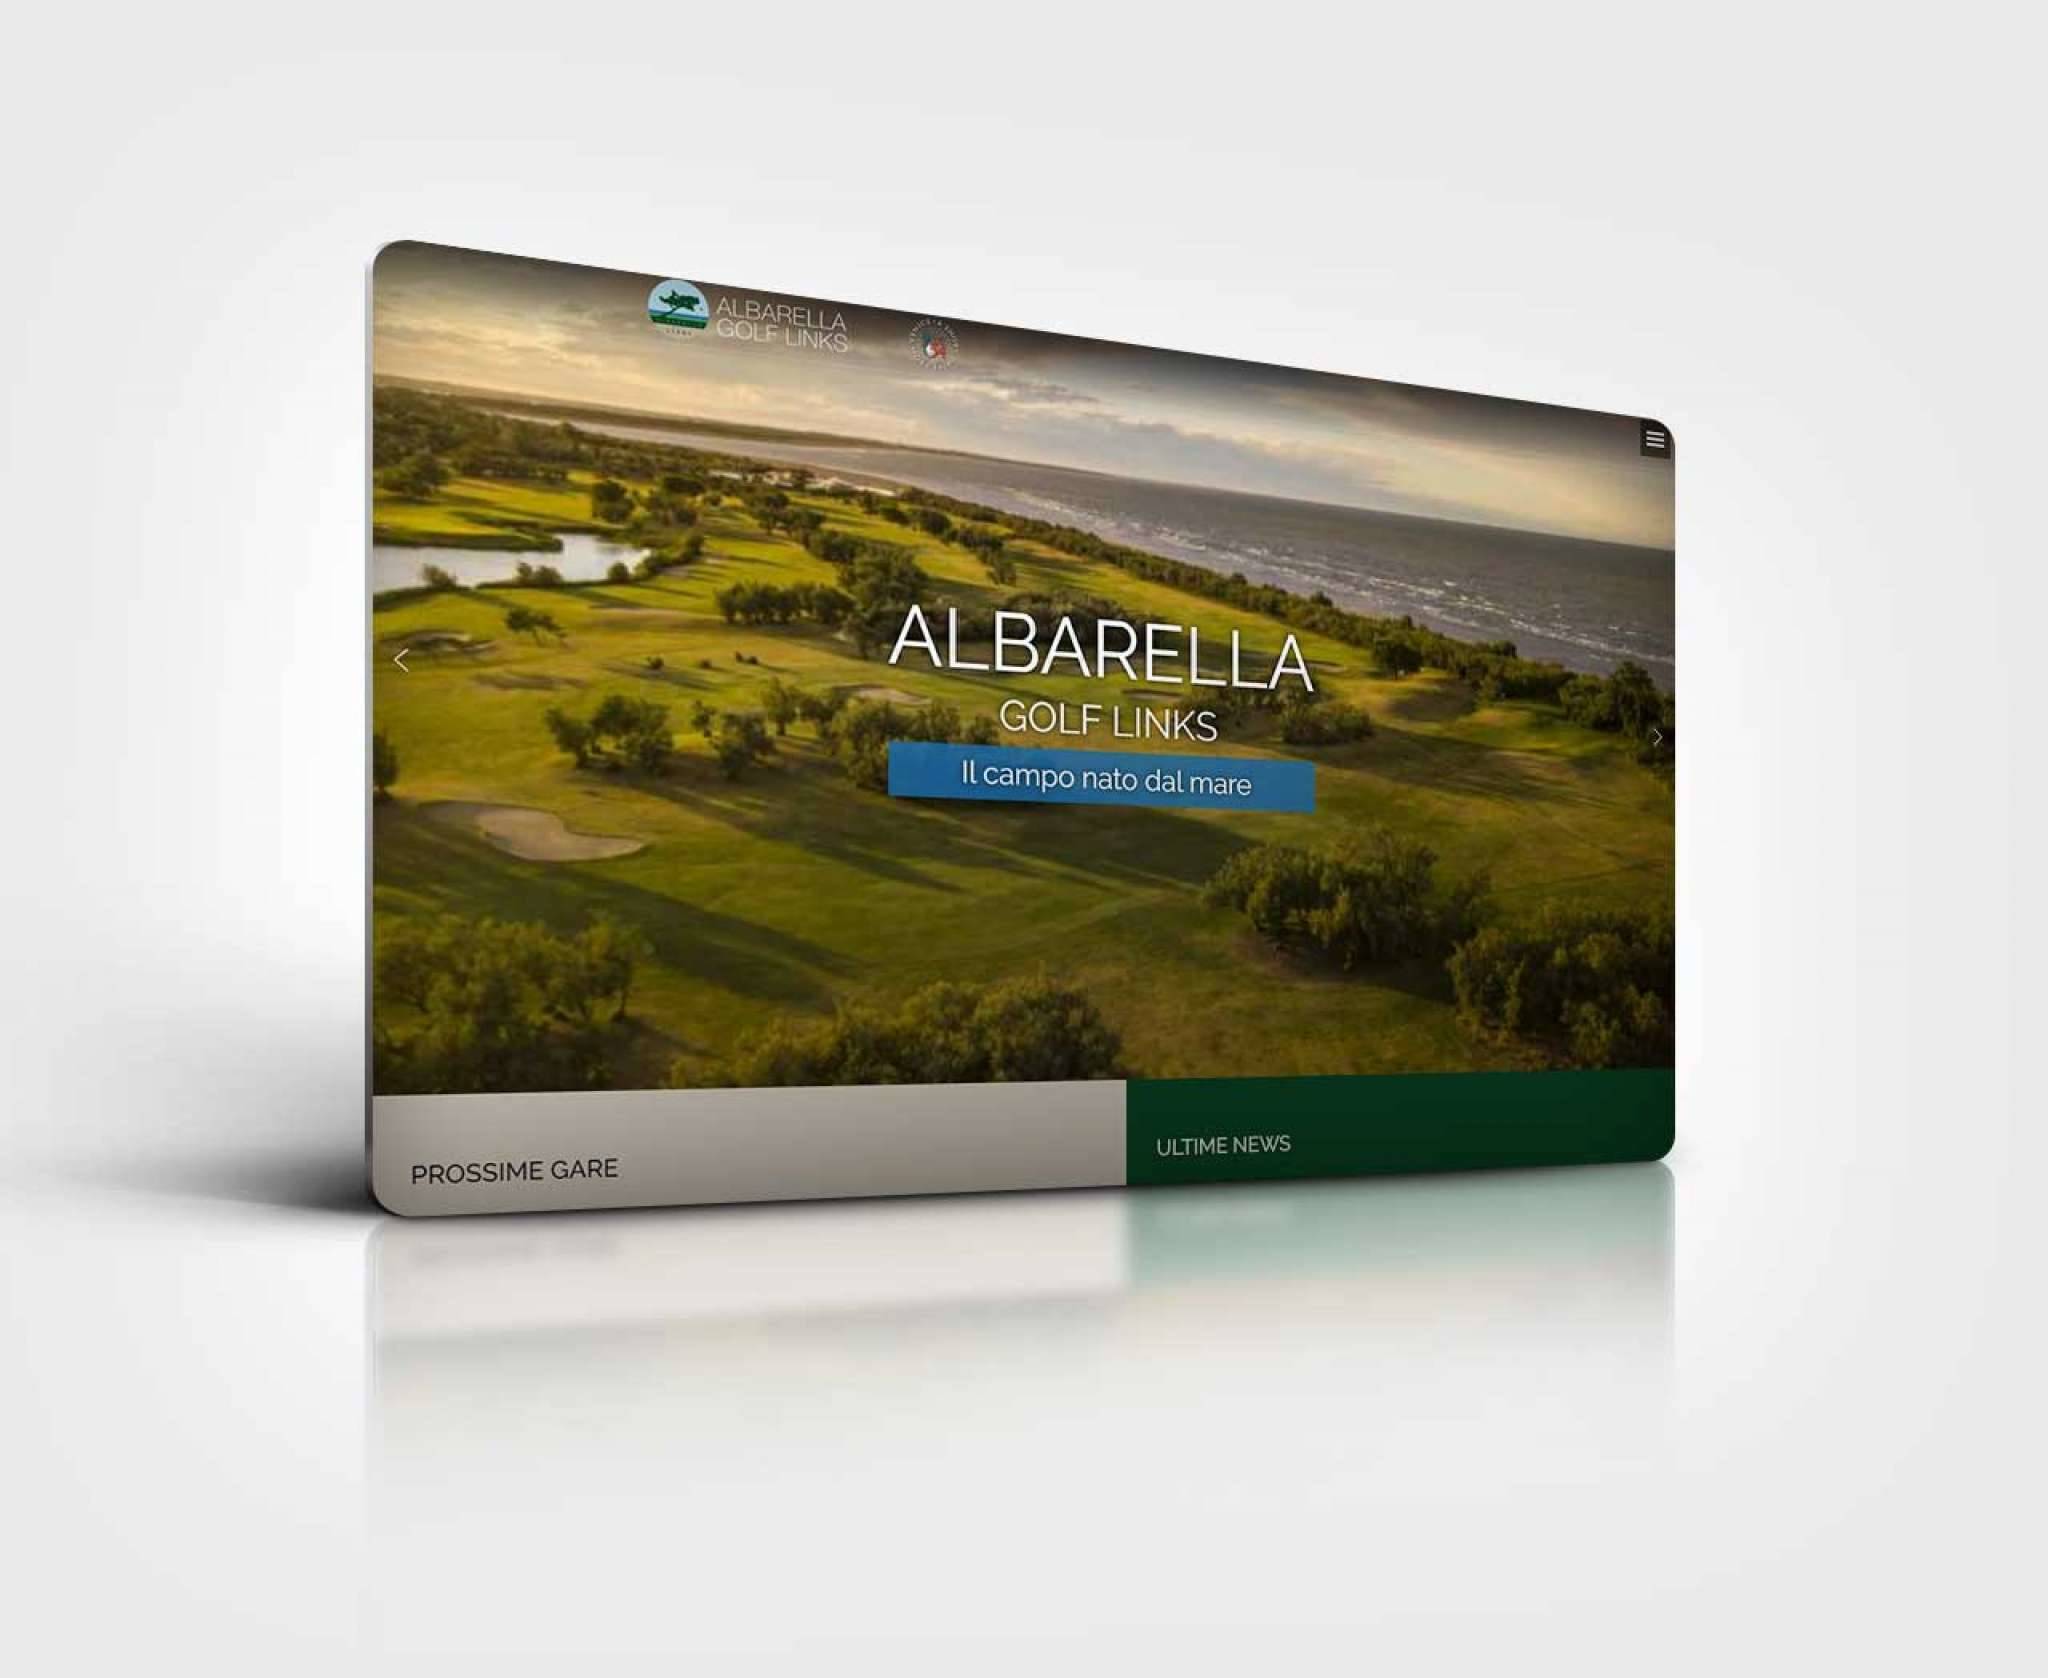 Golf Albarella